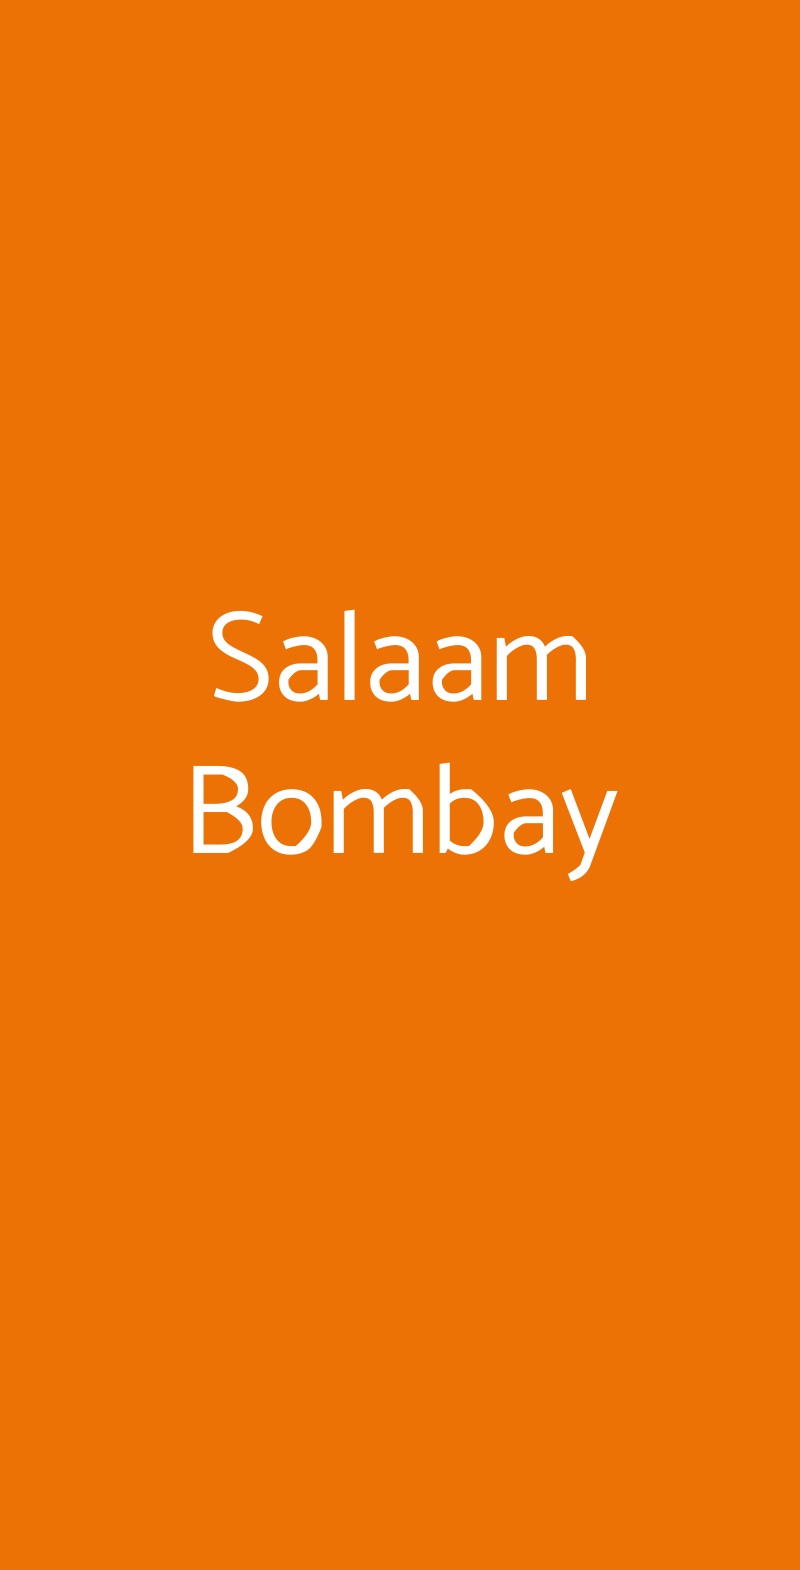 Salaam Bombay Firenze menù 1 pagina